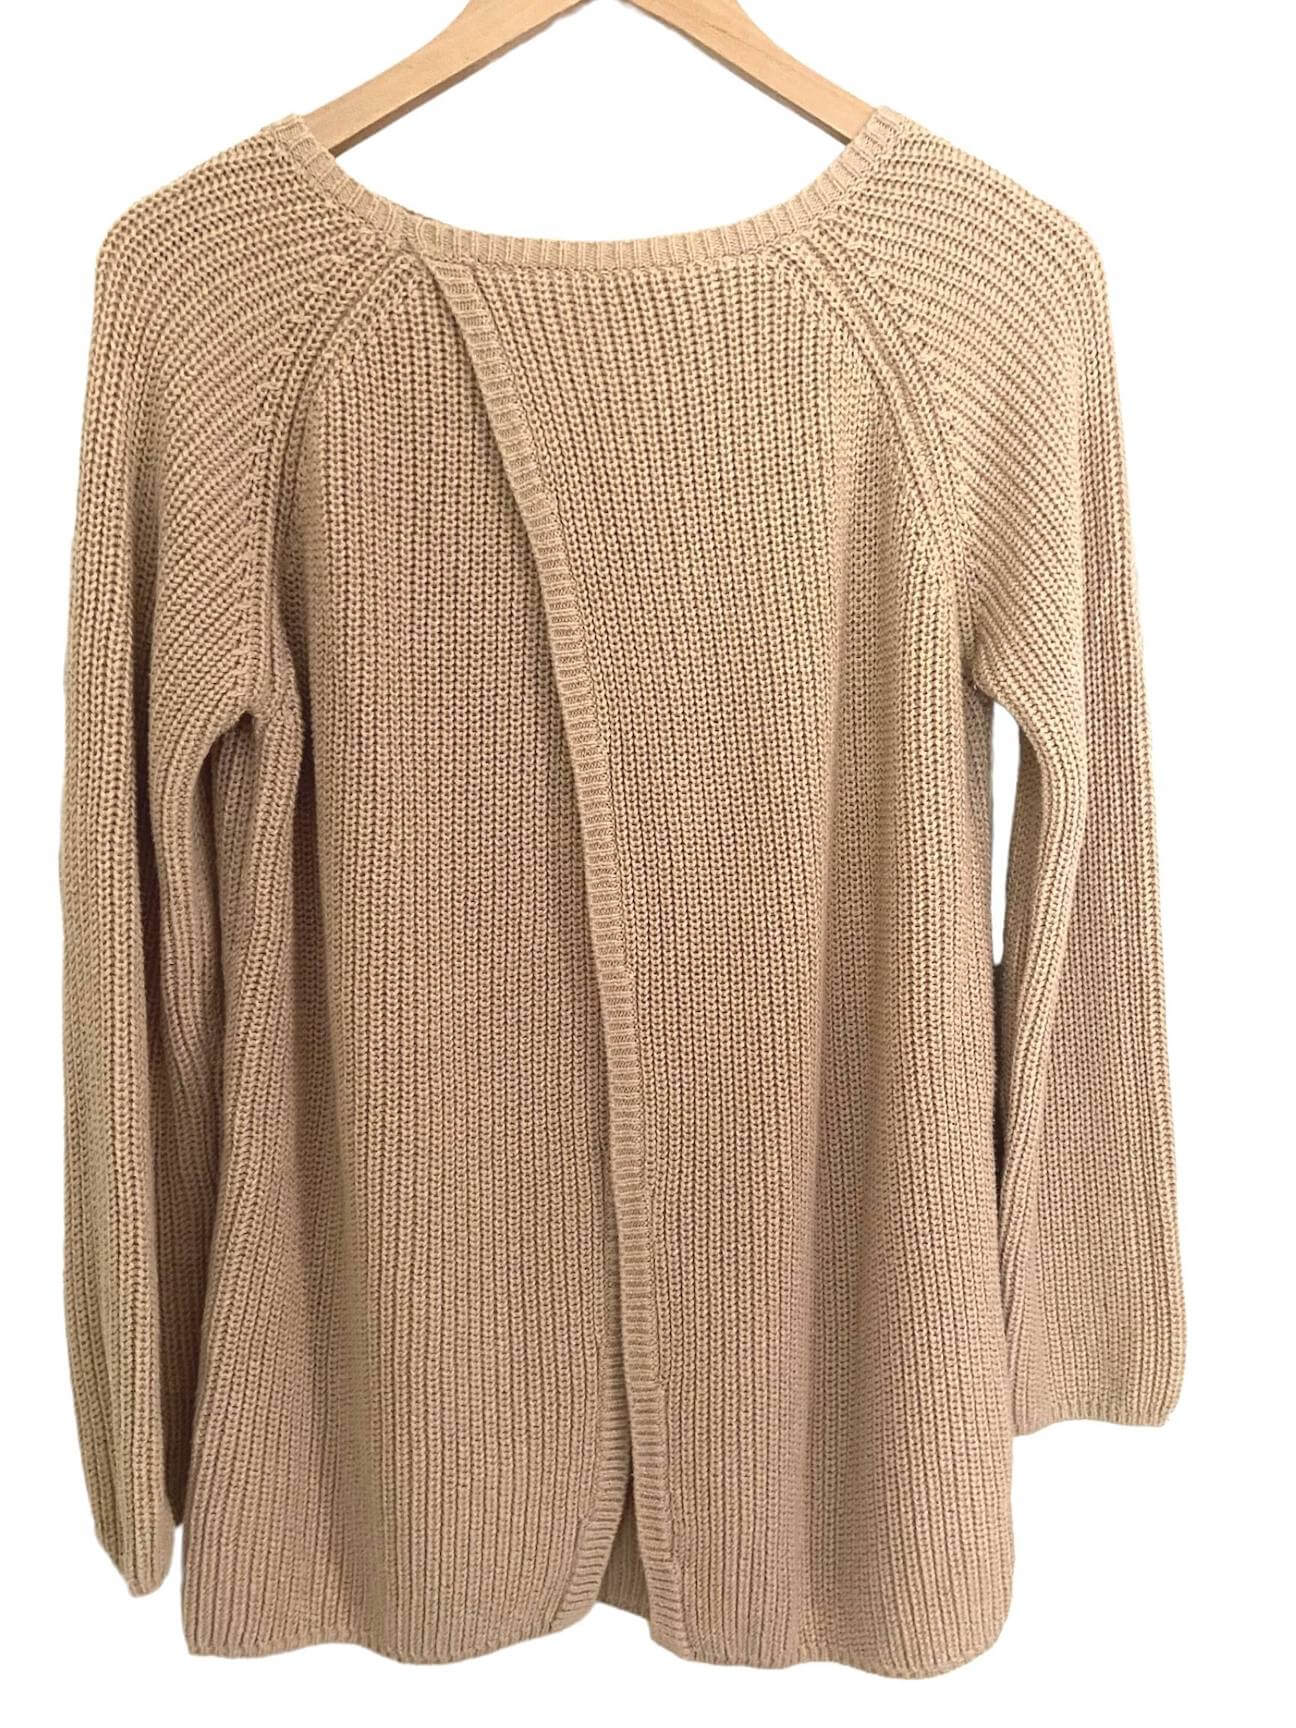 Soft Autumn sand beige 525 AMERICA split-back sweater